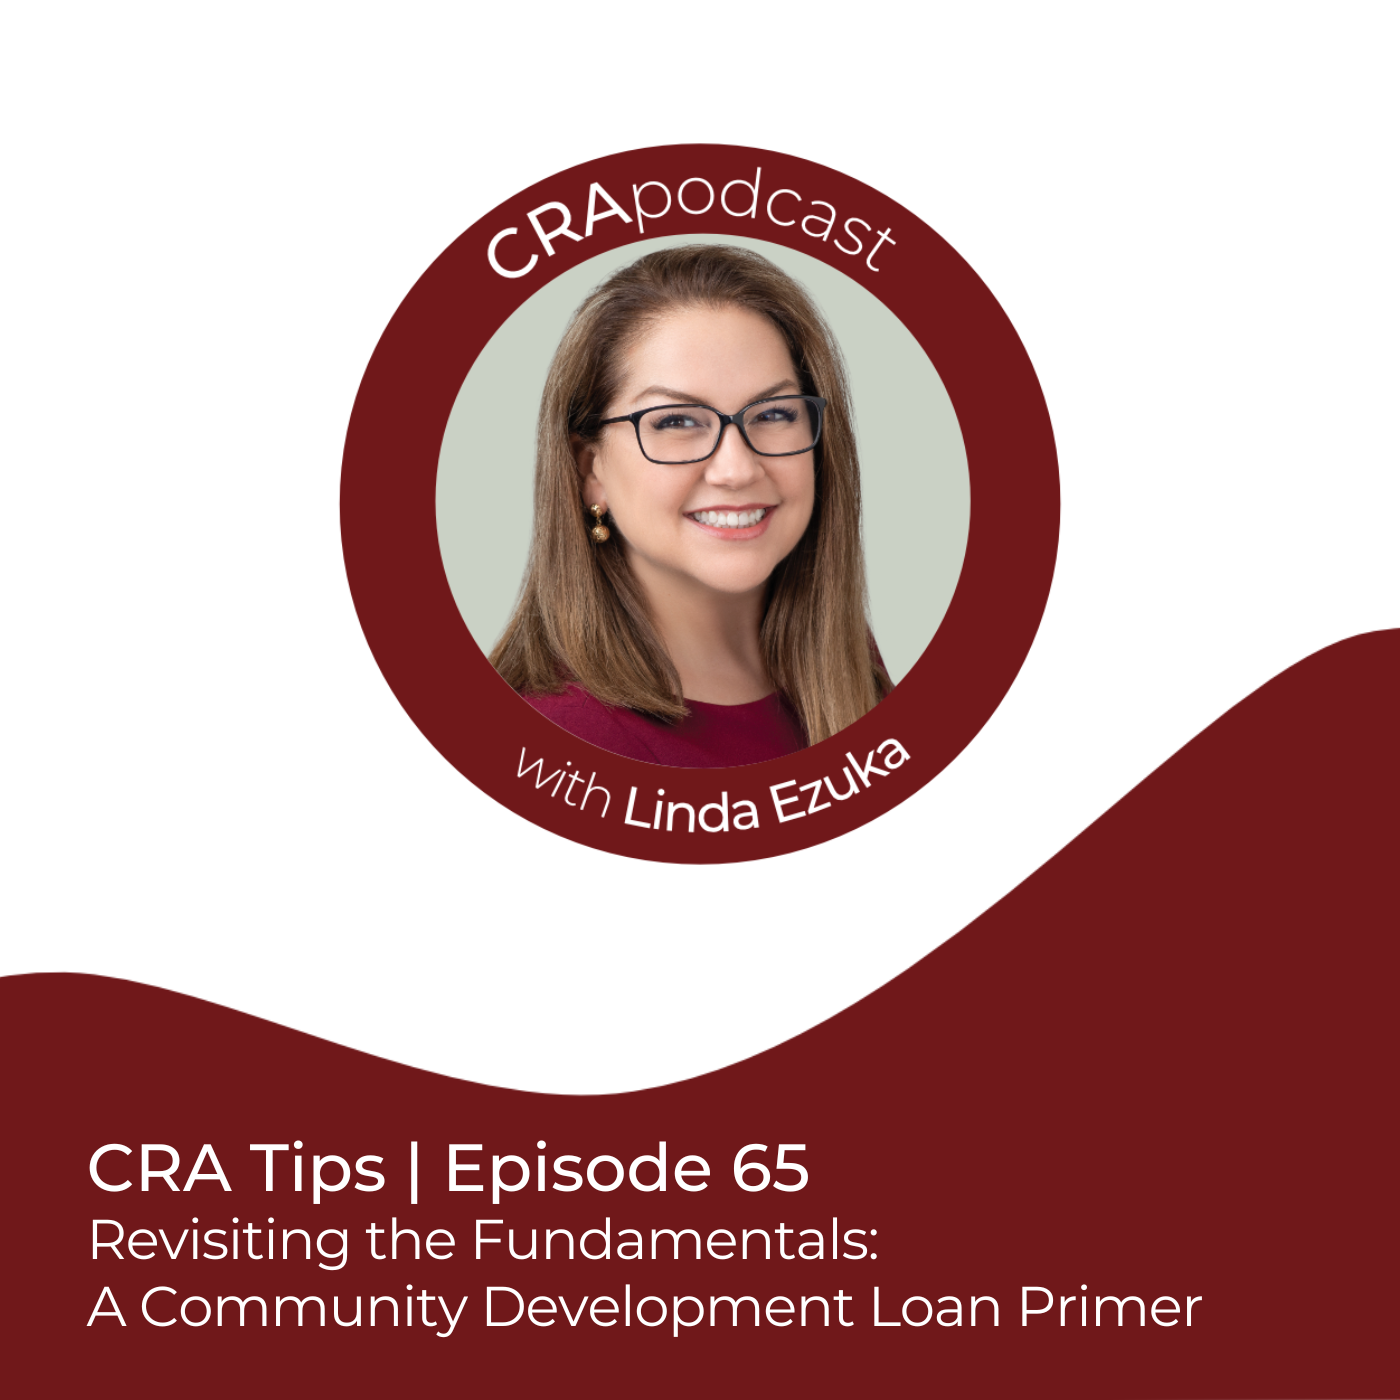 Episode 65: CRA Tips: Revisiting the Fundamentals: A Community Development Loan Primer